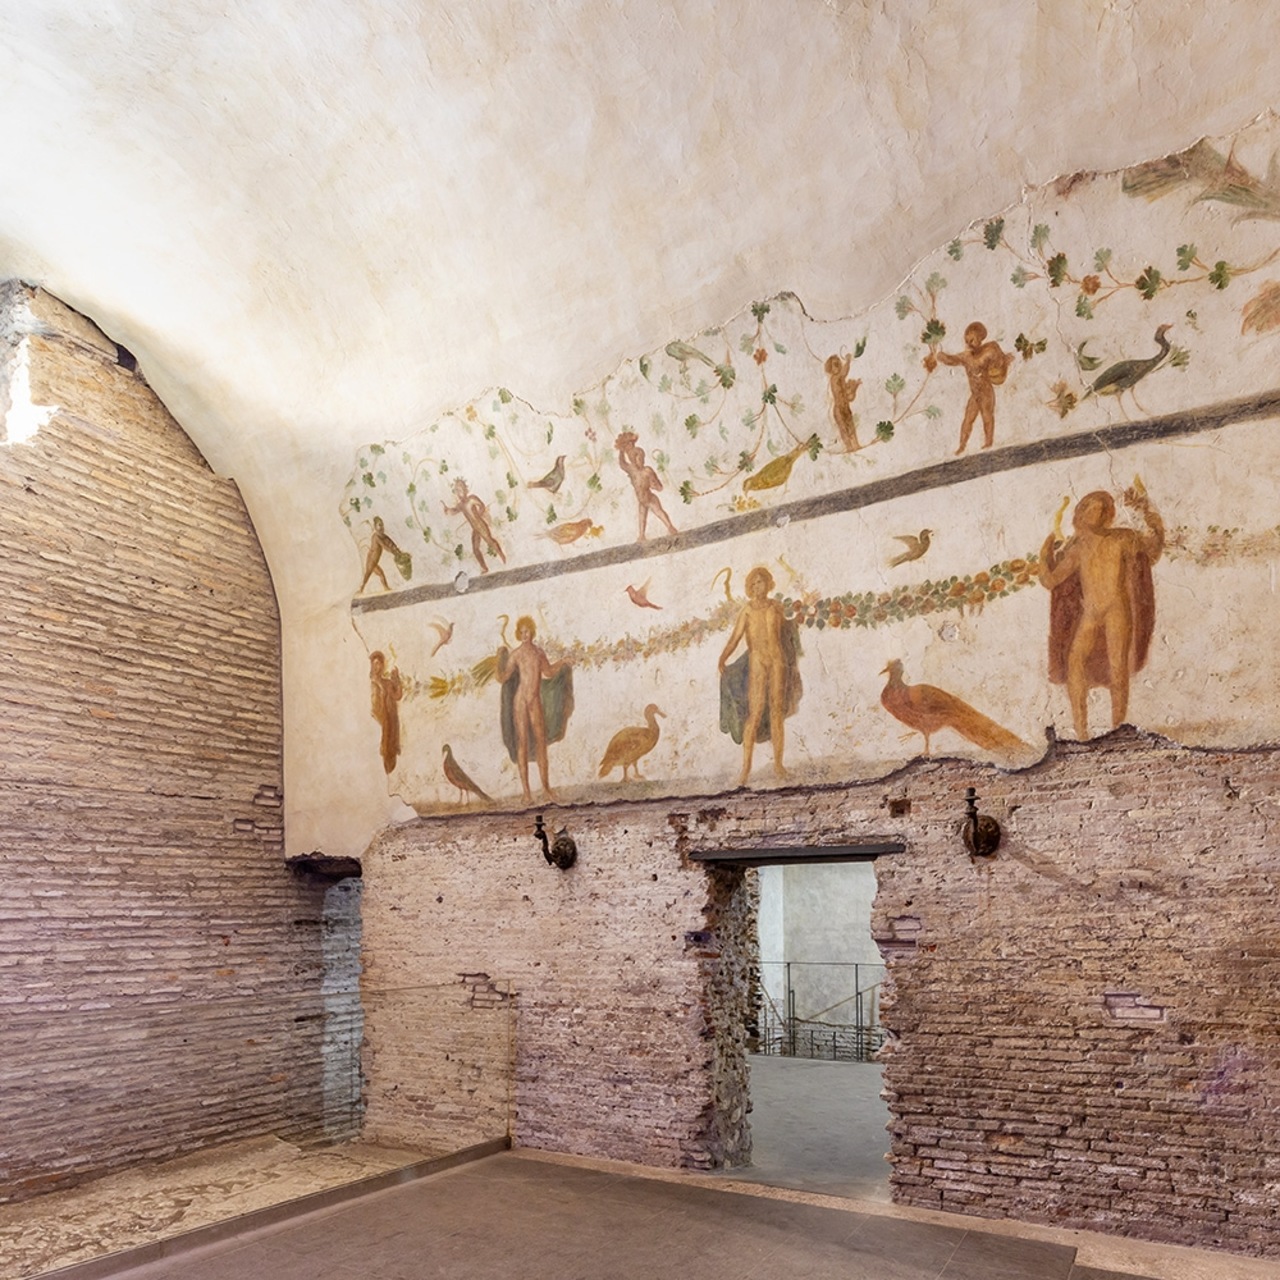 ArcheoVerso: โครงการด้านวัฒนธรรมจะใช้ Case Romane del Celio ซึ่งเป็นอาคารที่อยู่อาศัยของชาวโรมันโบราณ ซึ่งยังไม่ค่อยมีใครรู้จักแม้จะอยู่หลังโคลอสเซียมก็ตาม สำหรับระยะทดลองสองปี